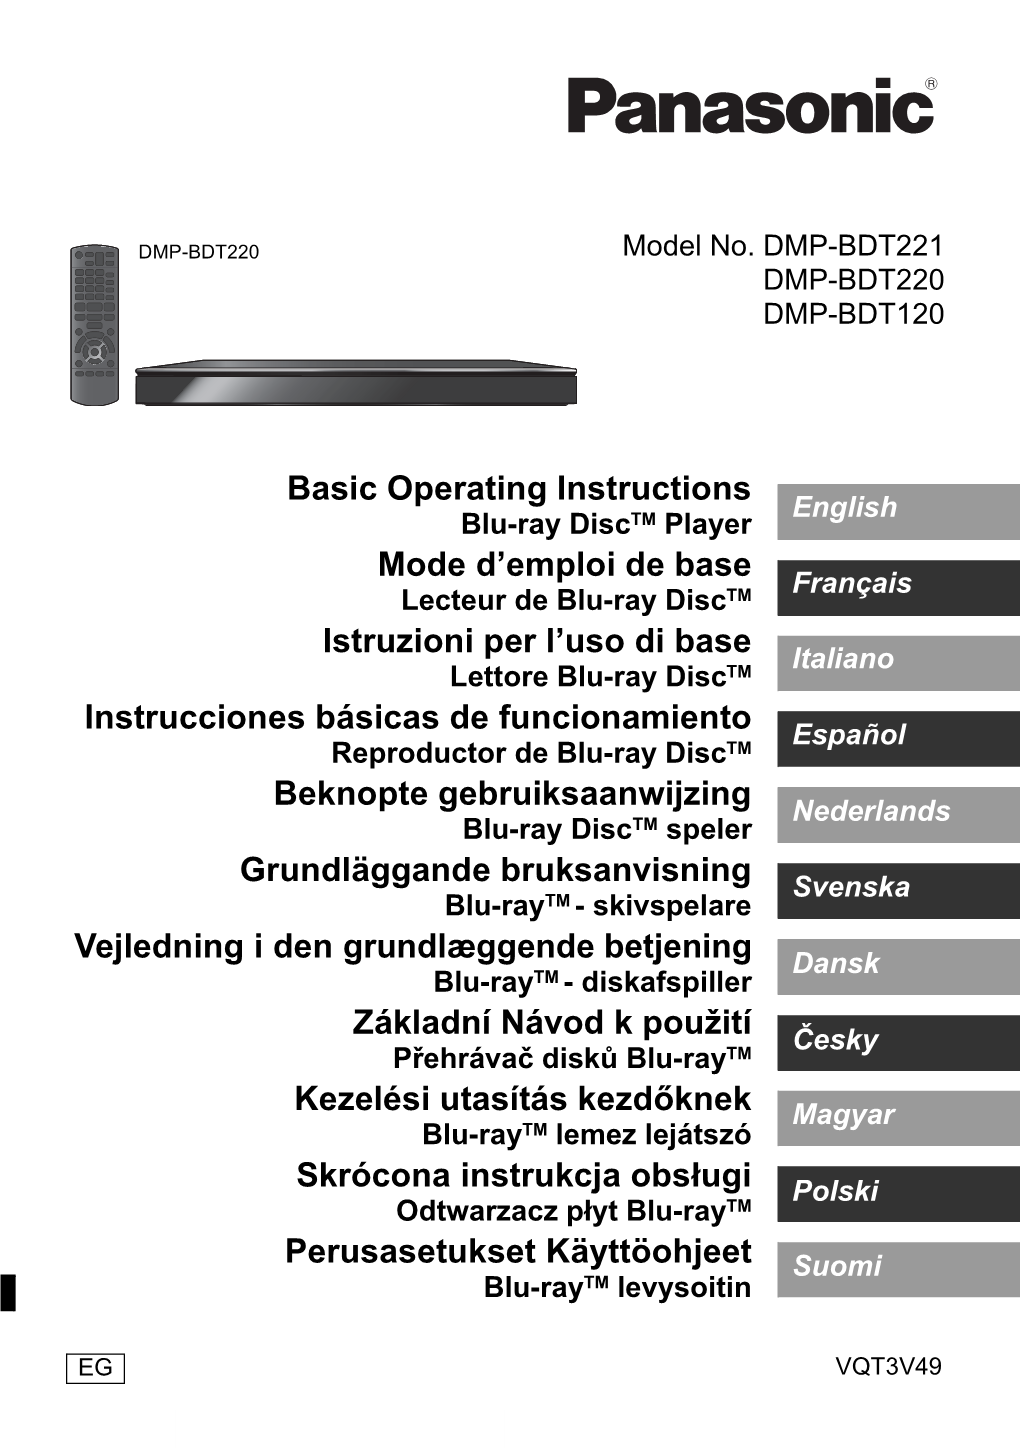 Basic Operating Instructions Mode D'emploi De Base Istruzioni Per L'uso